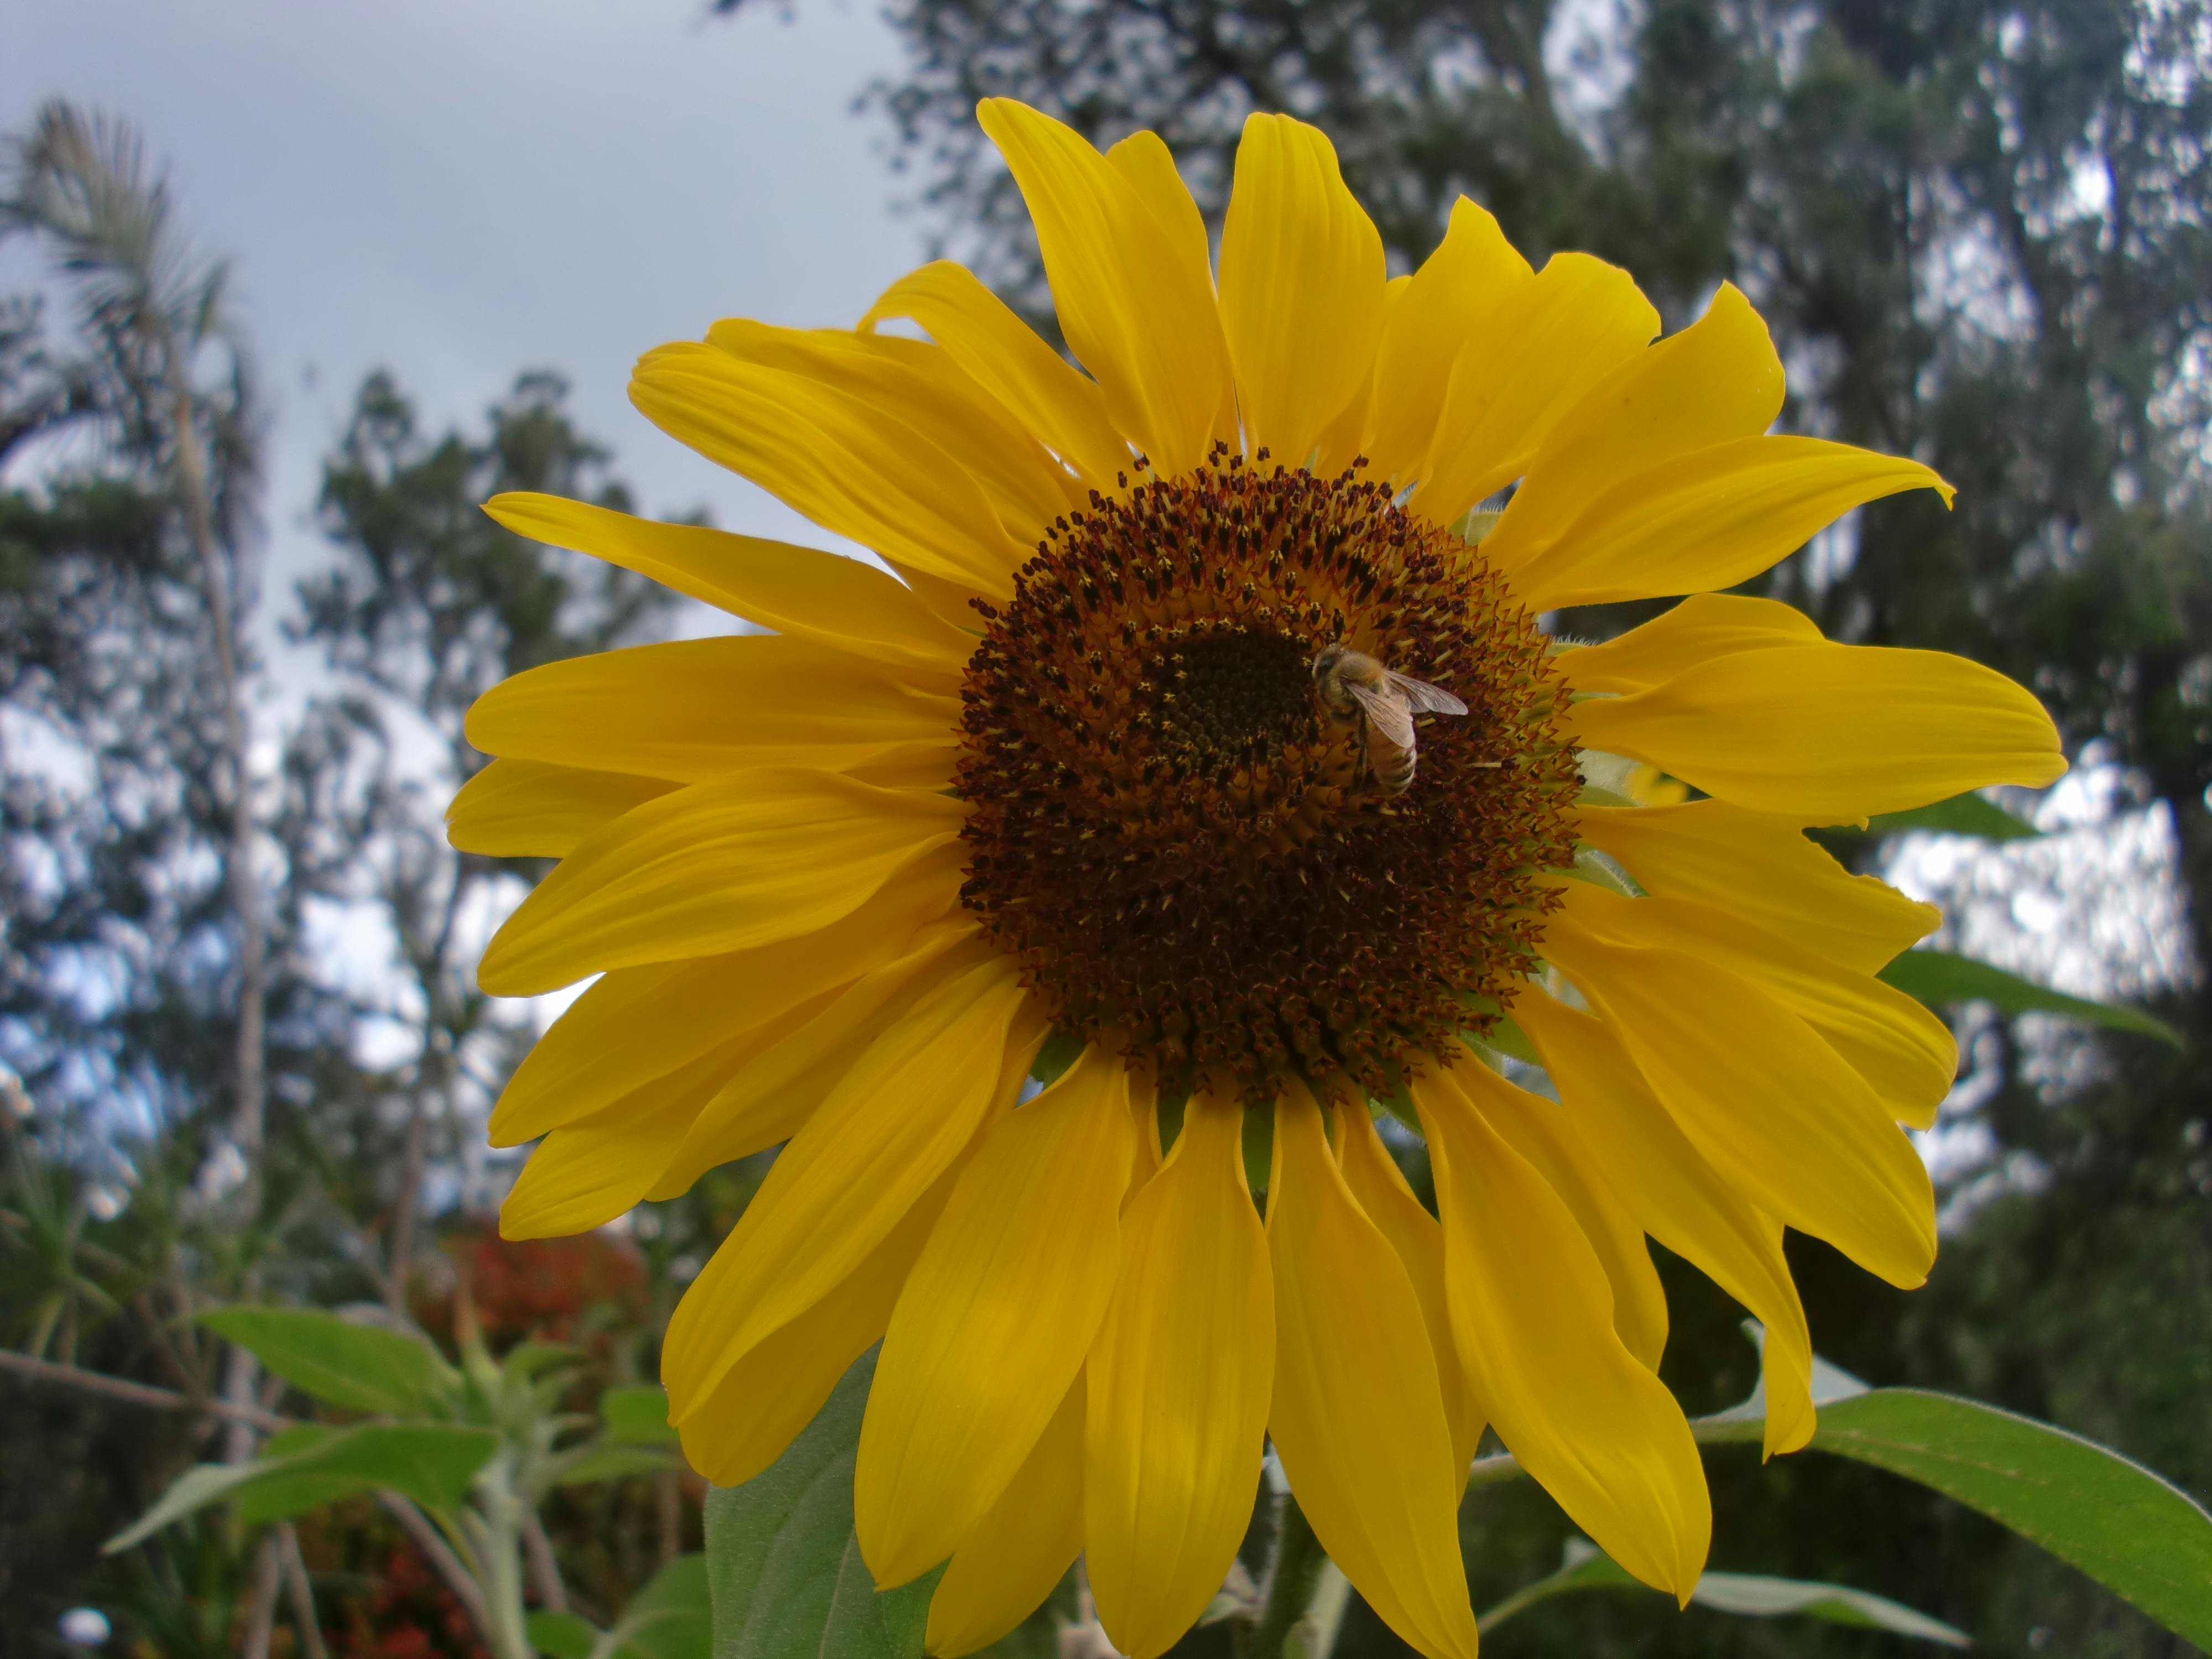 Free stock photo of #bee #sunflower #yellow #cute #nature #ecosystem